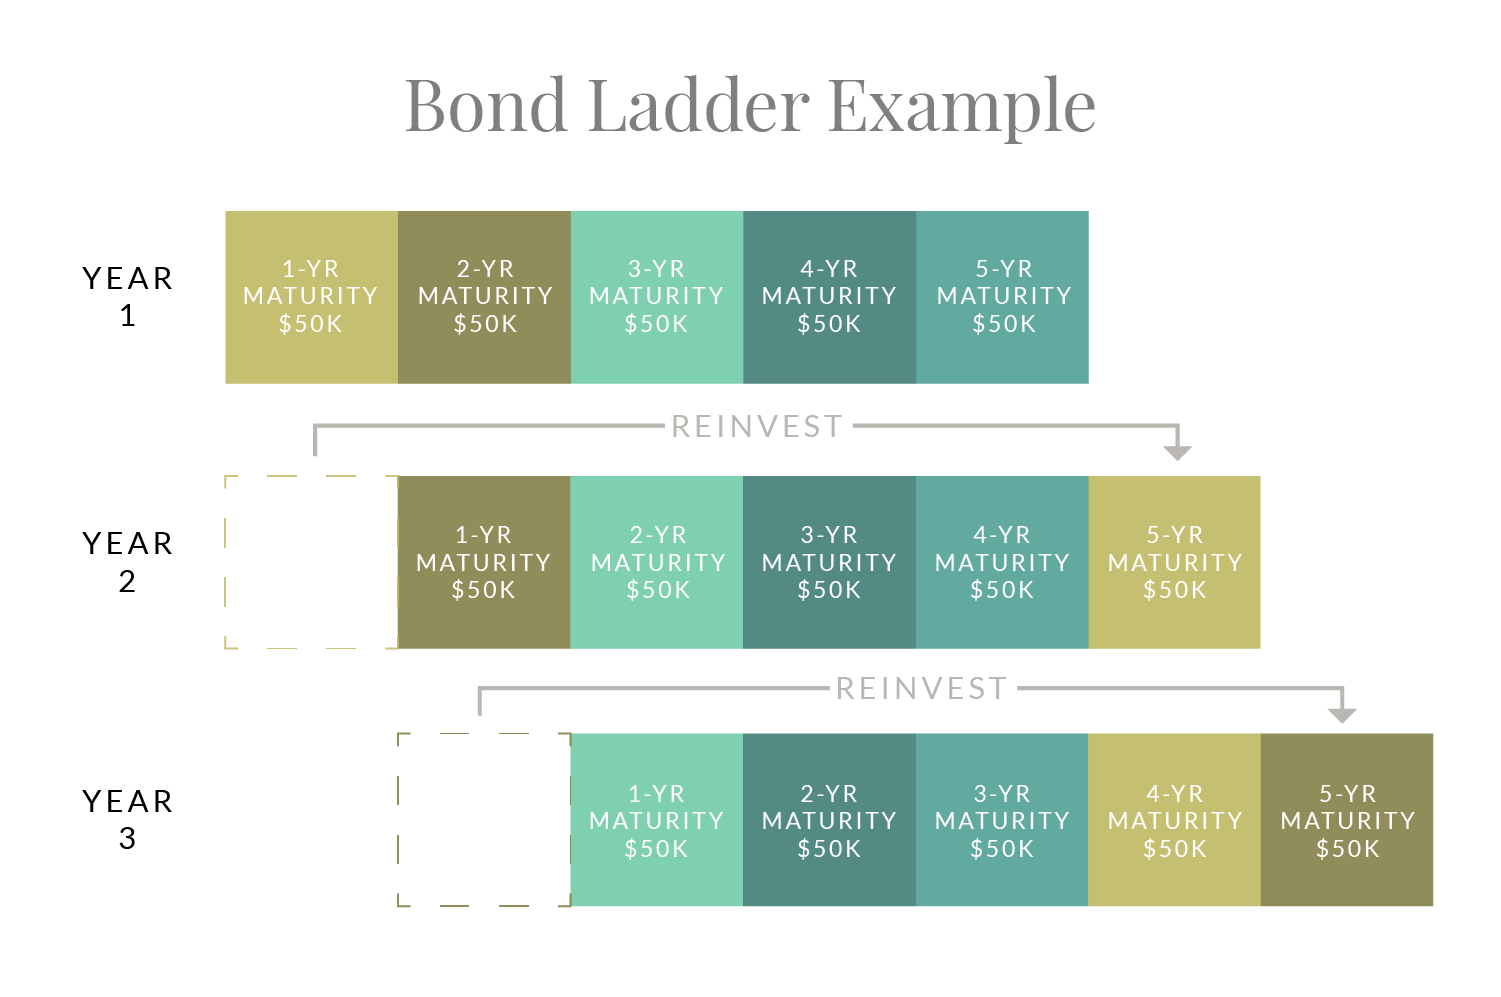 Bond Ladder Example